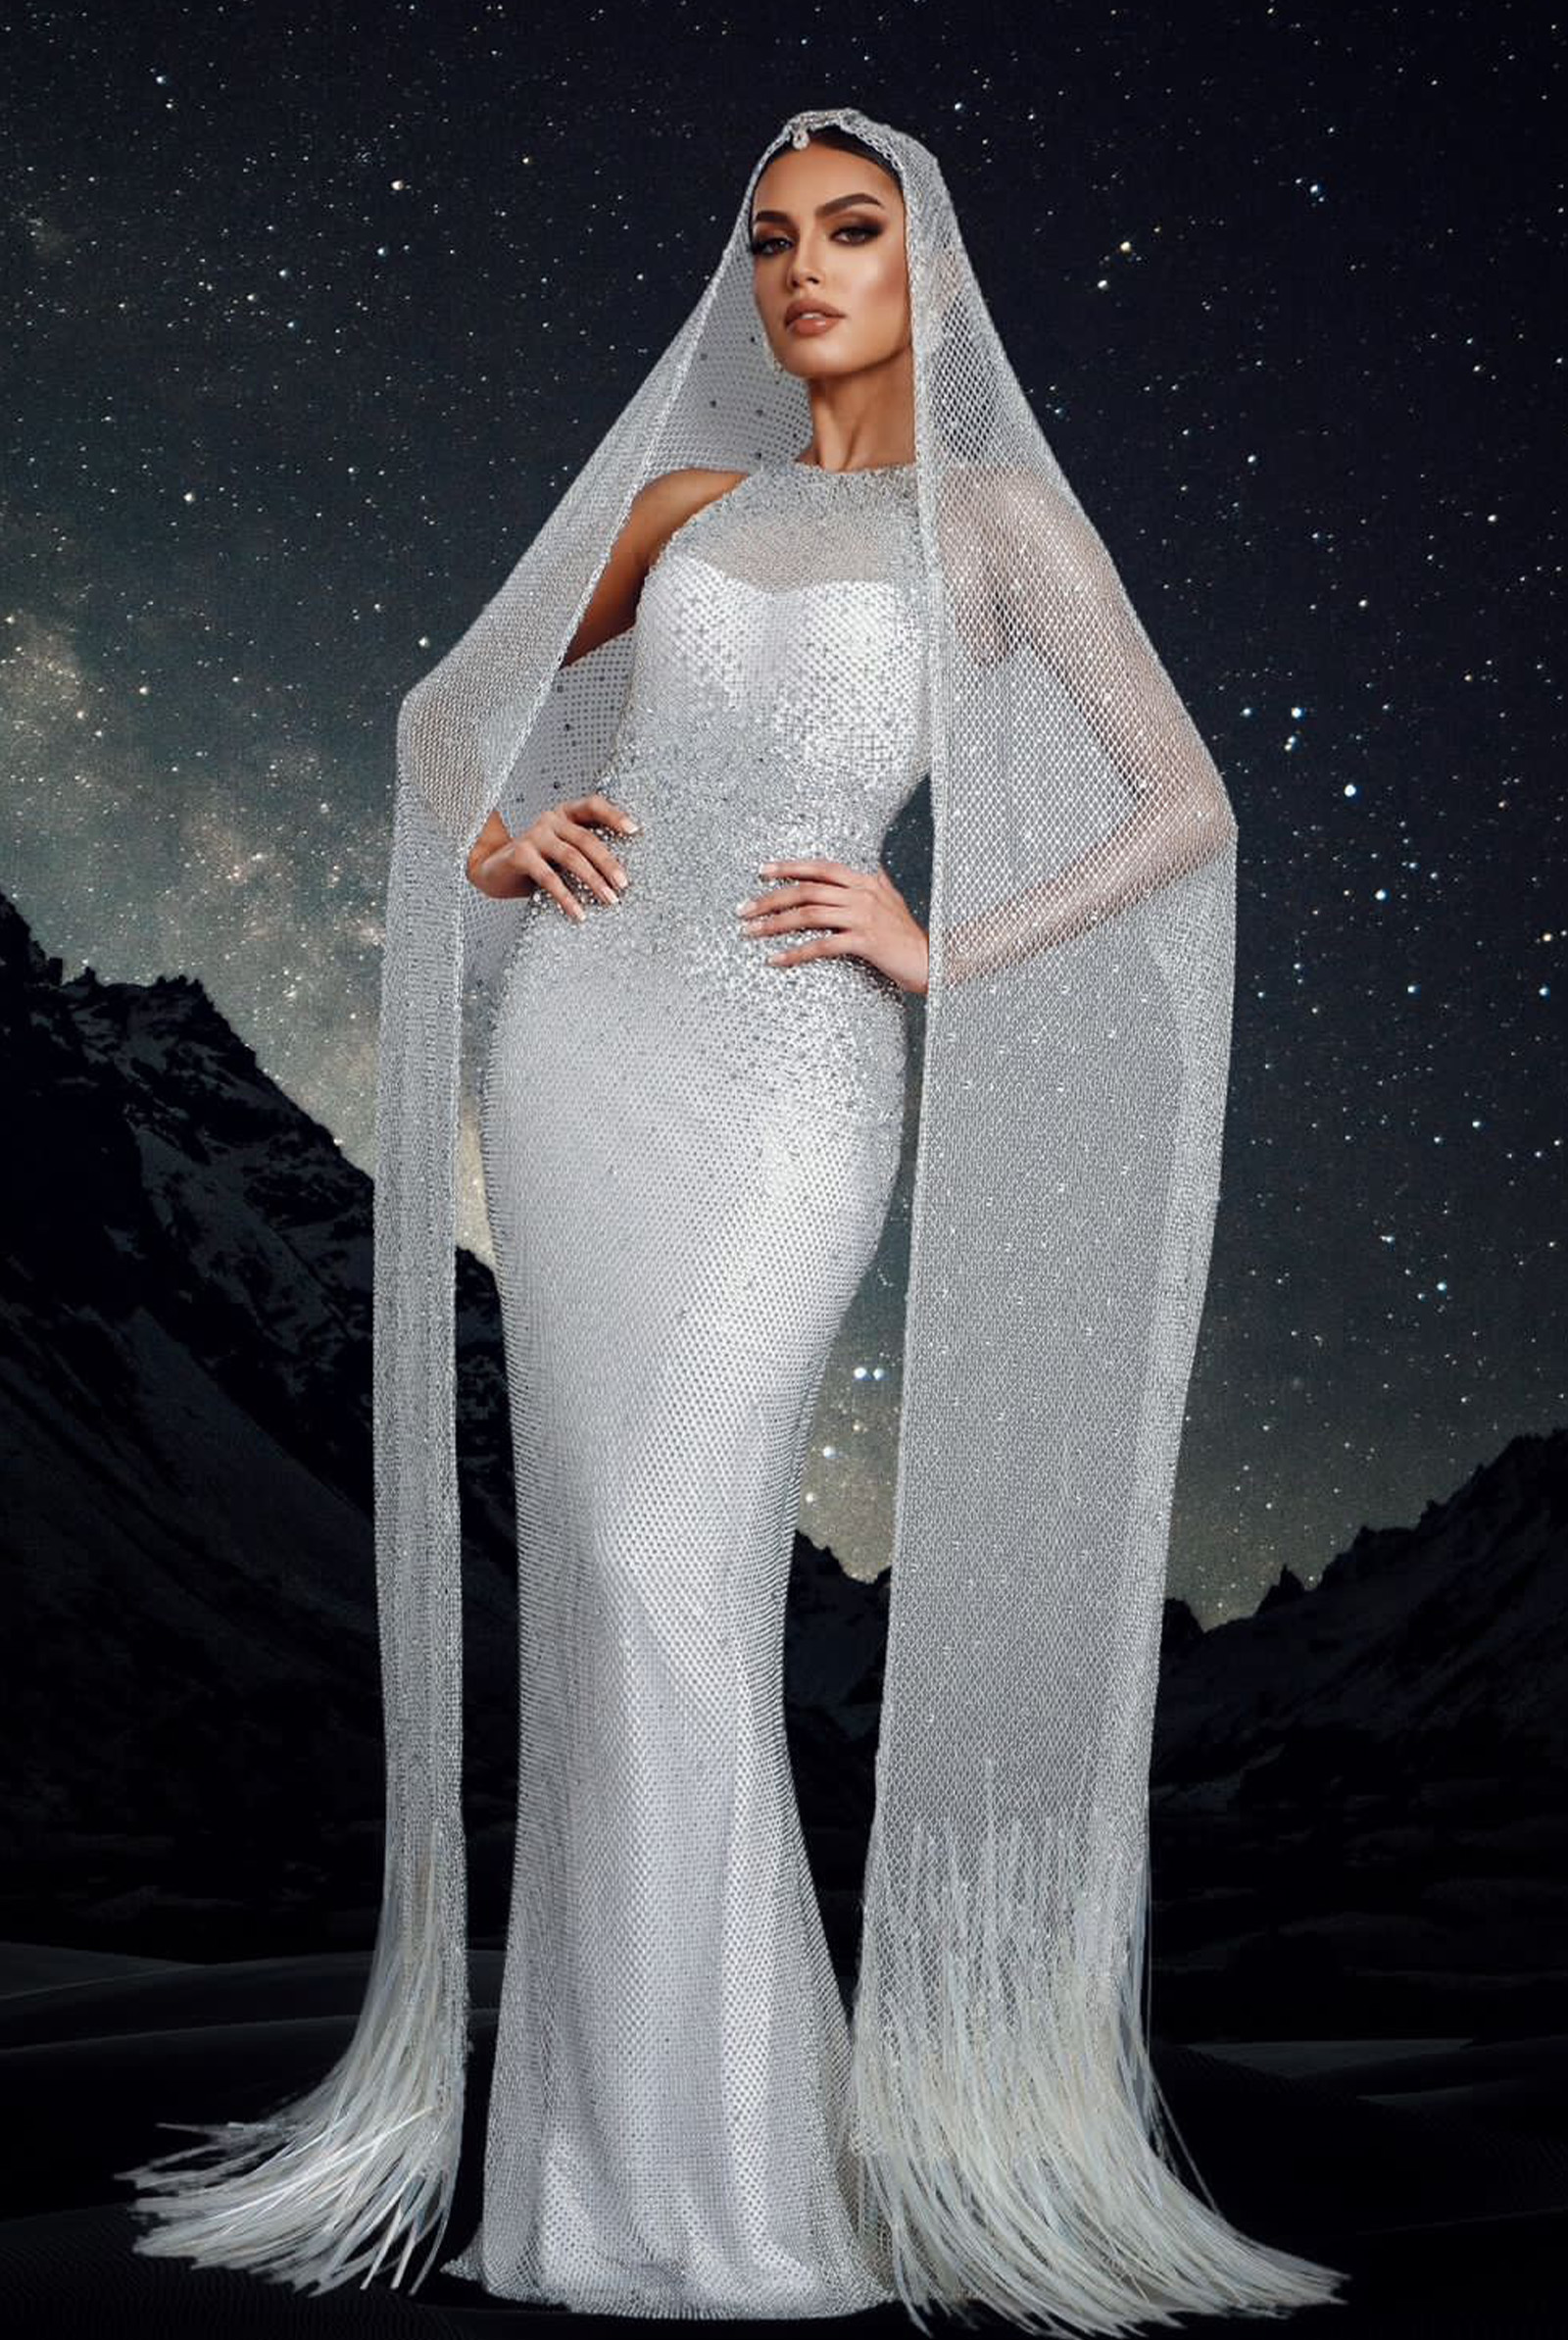 Miss Pakistan evening gown